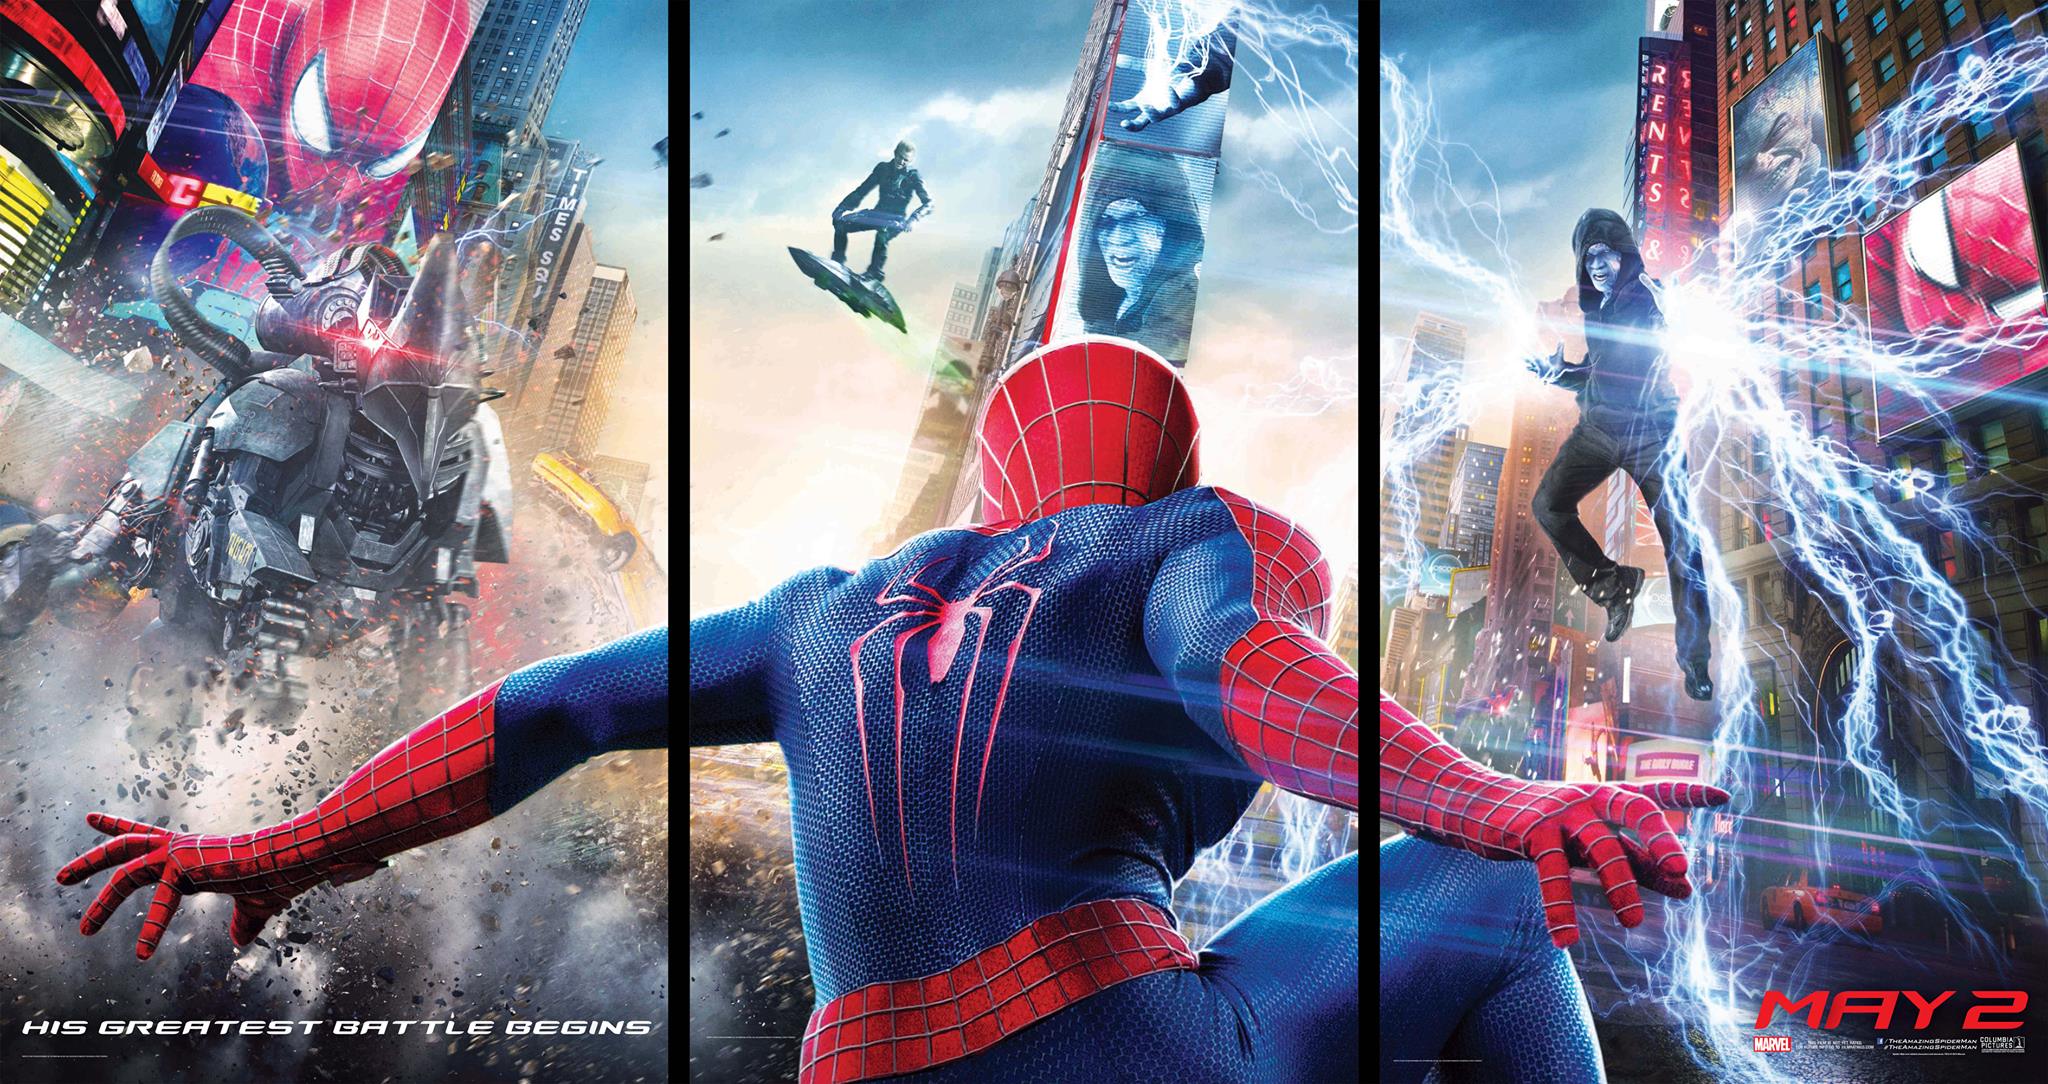 The Amazing Spider-Man 2 : 1 extrait exclusif + 1 bande annonce suédée